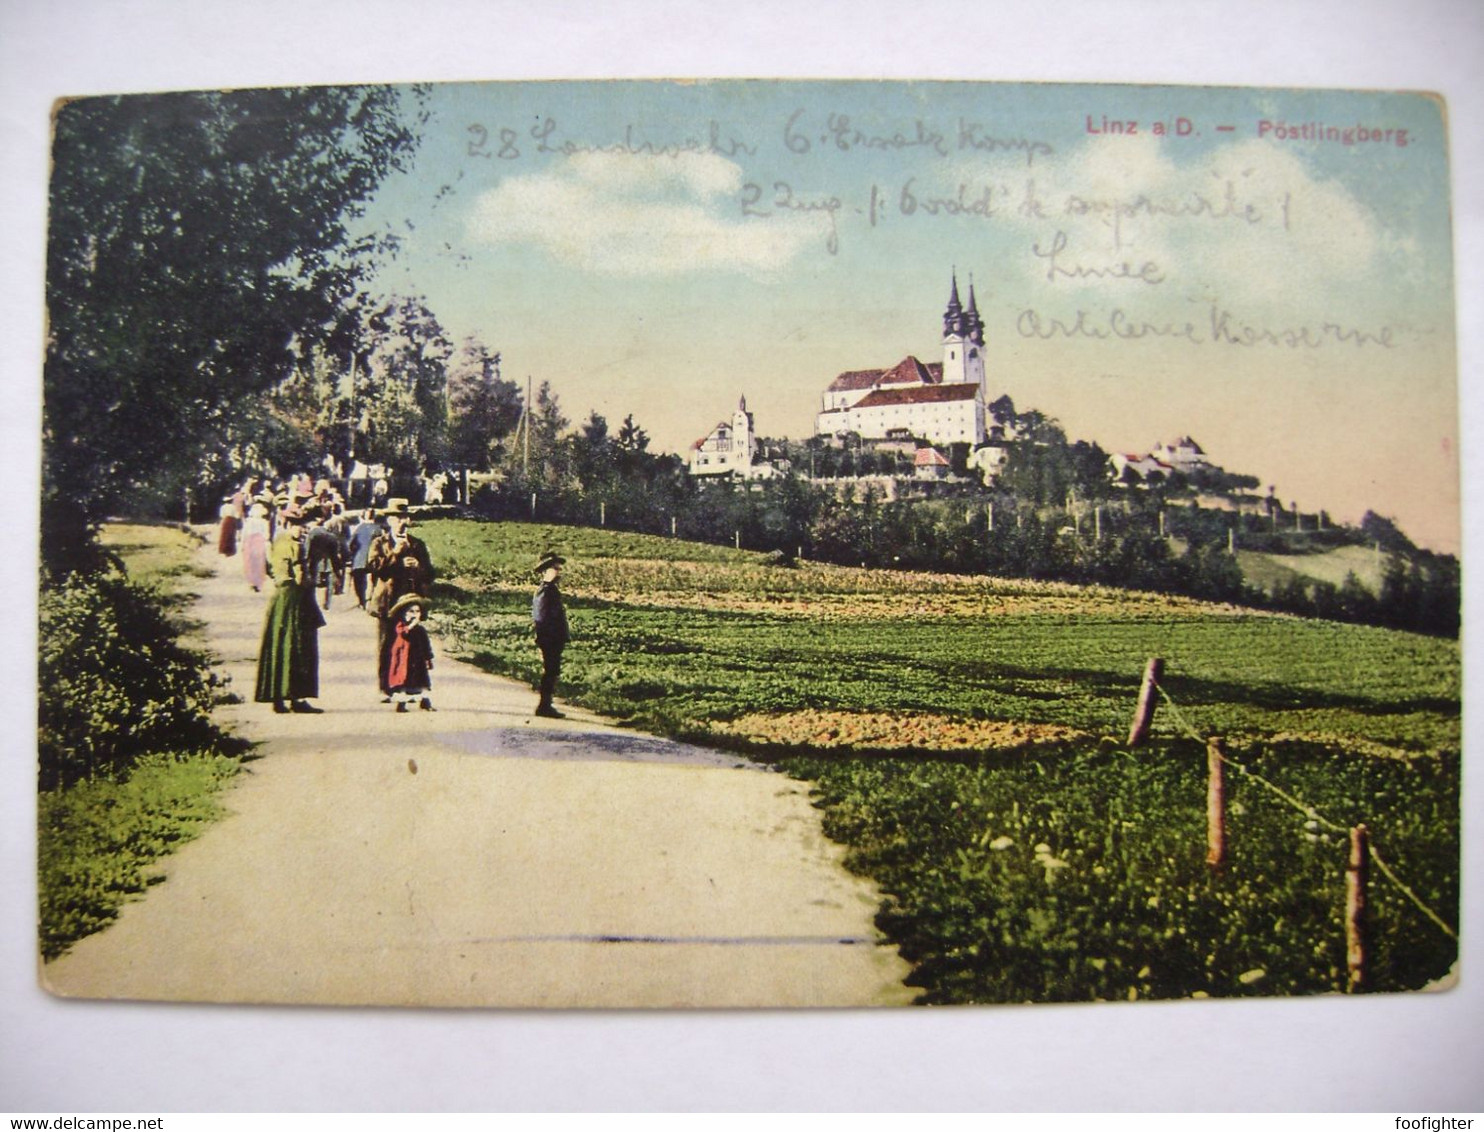 Linz A. D. - Pöstlingberg 1915 - Linz Pöstlingberg